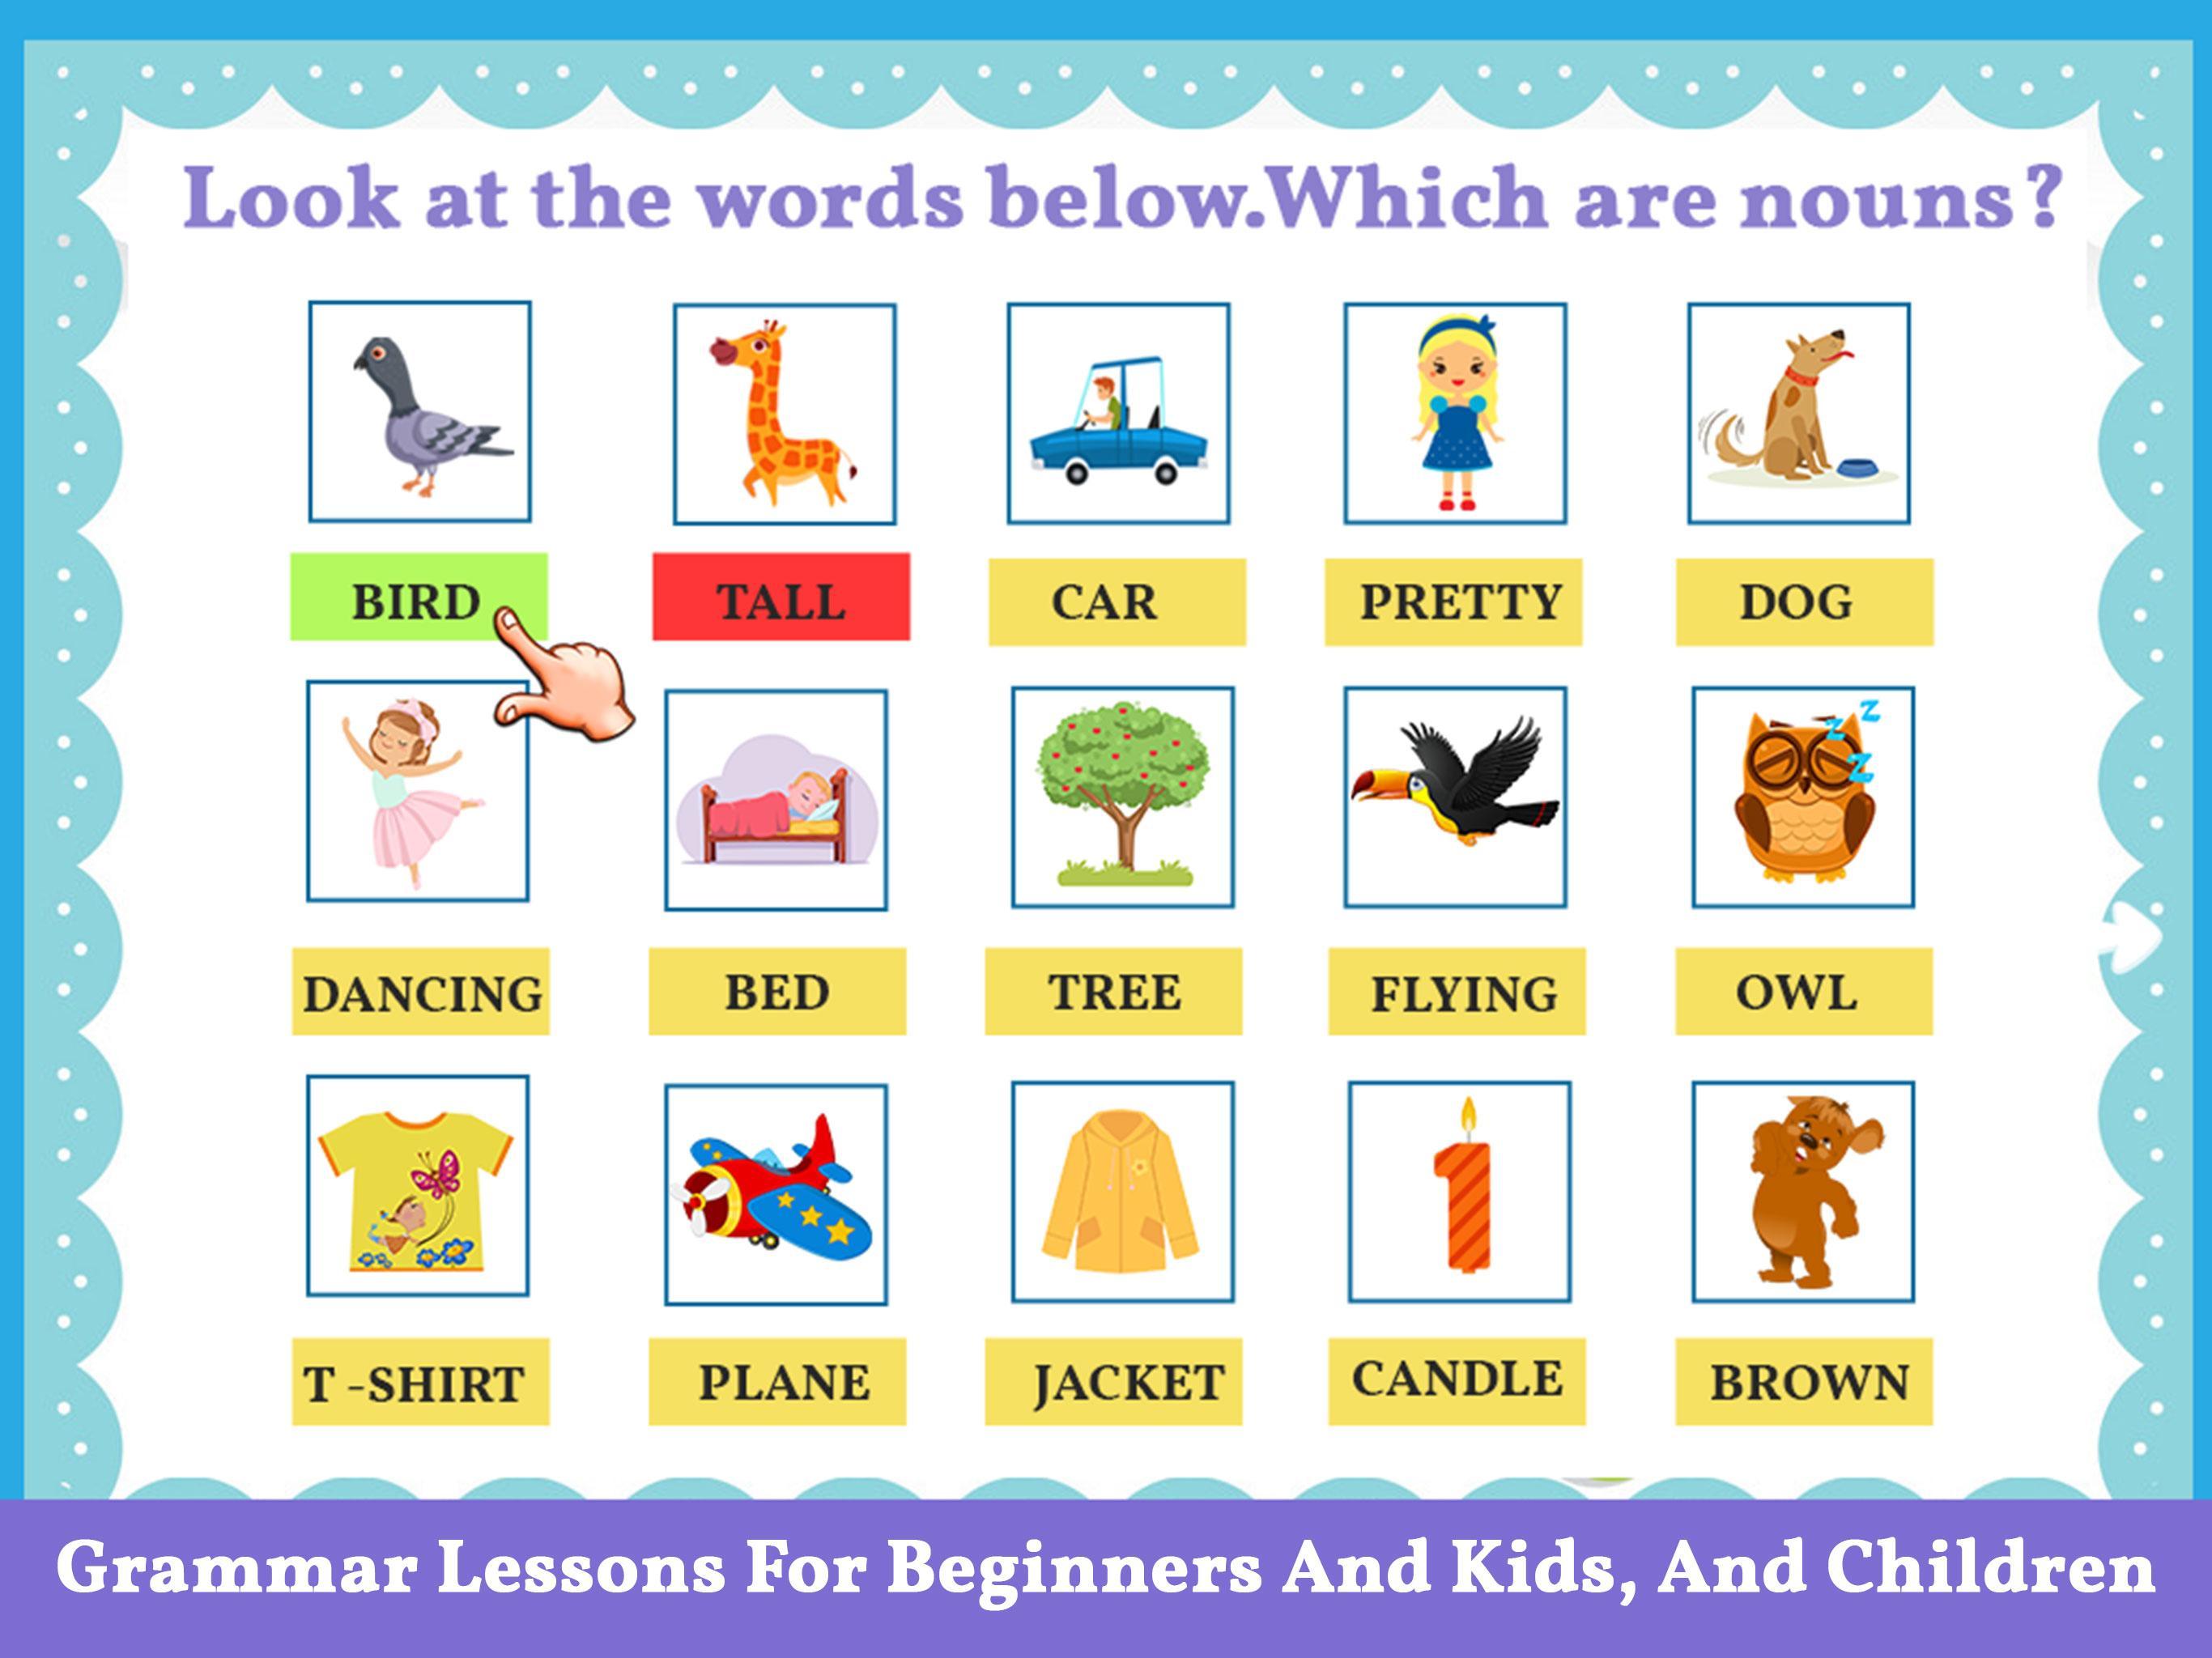 English Grammar and Vocabulary for Kids 13.0 Screenshot 22